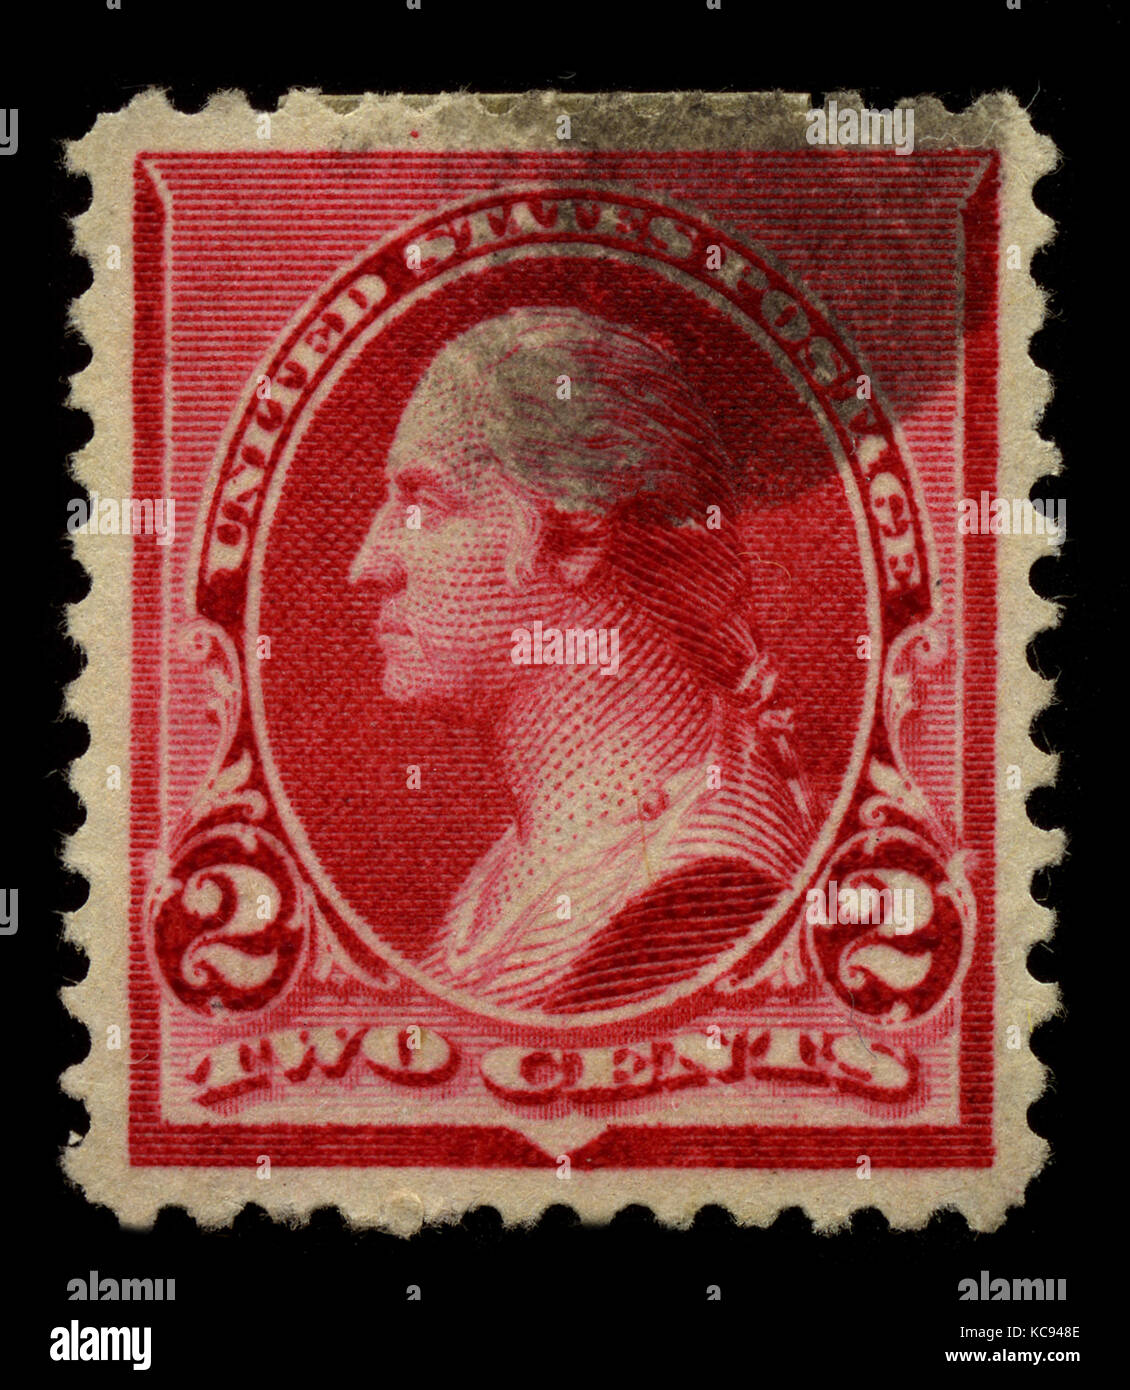 USA - CIRCA 1930: A stamp printed in USA shows Portrait President George Washington circa 1930. Stock Photo